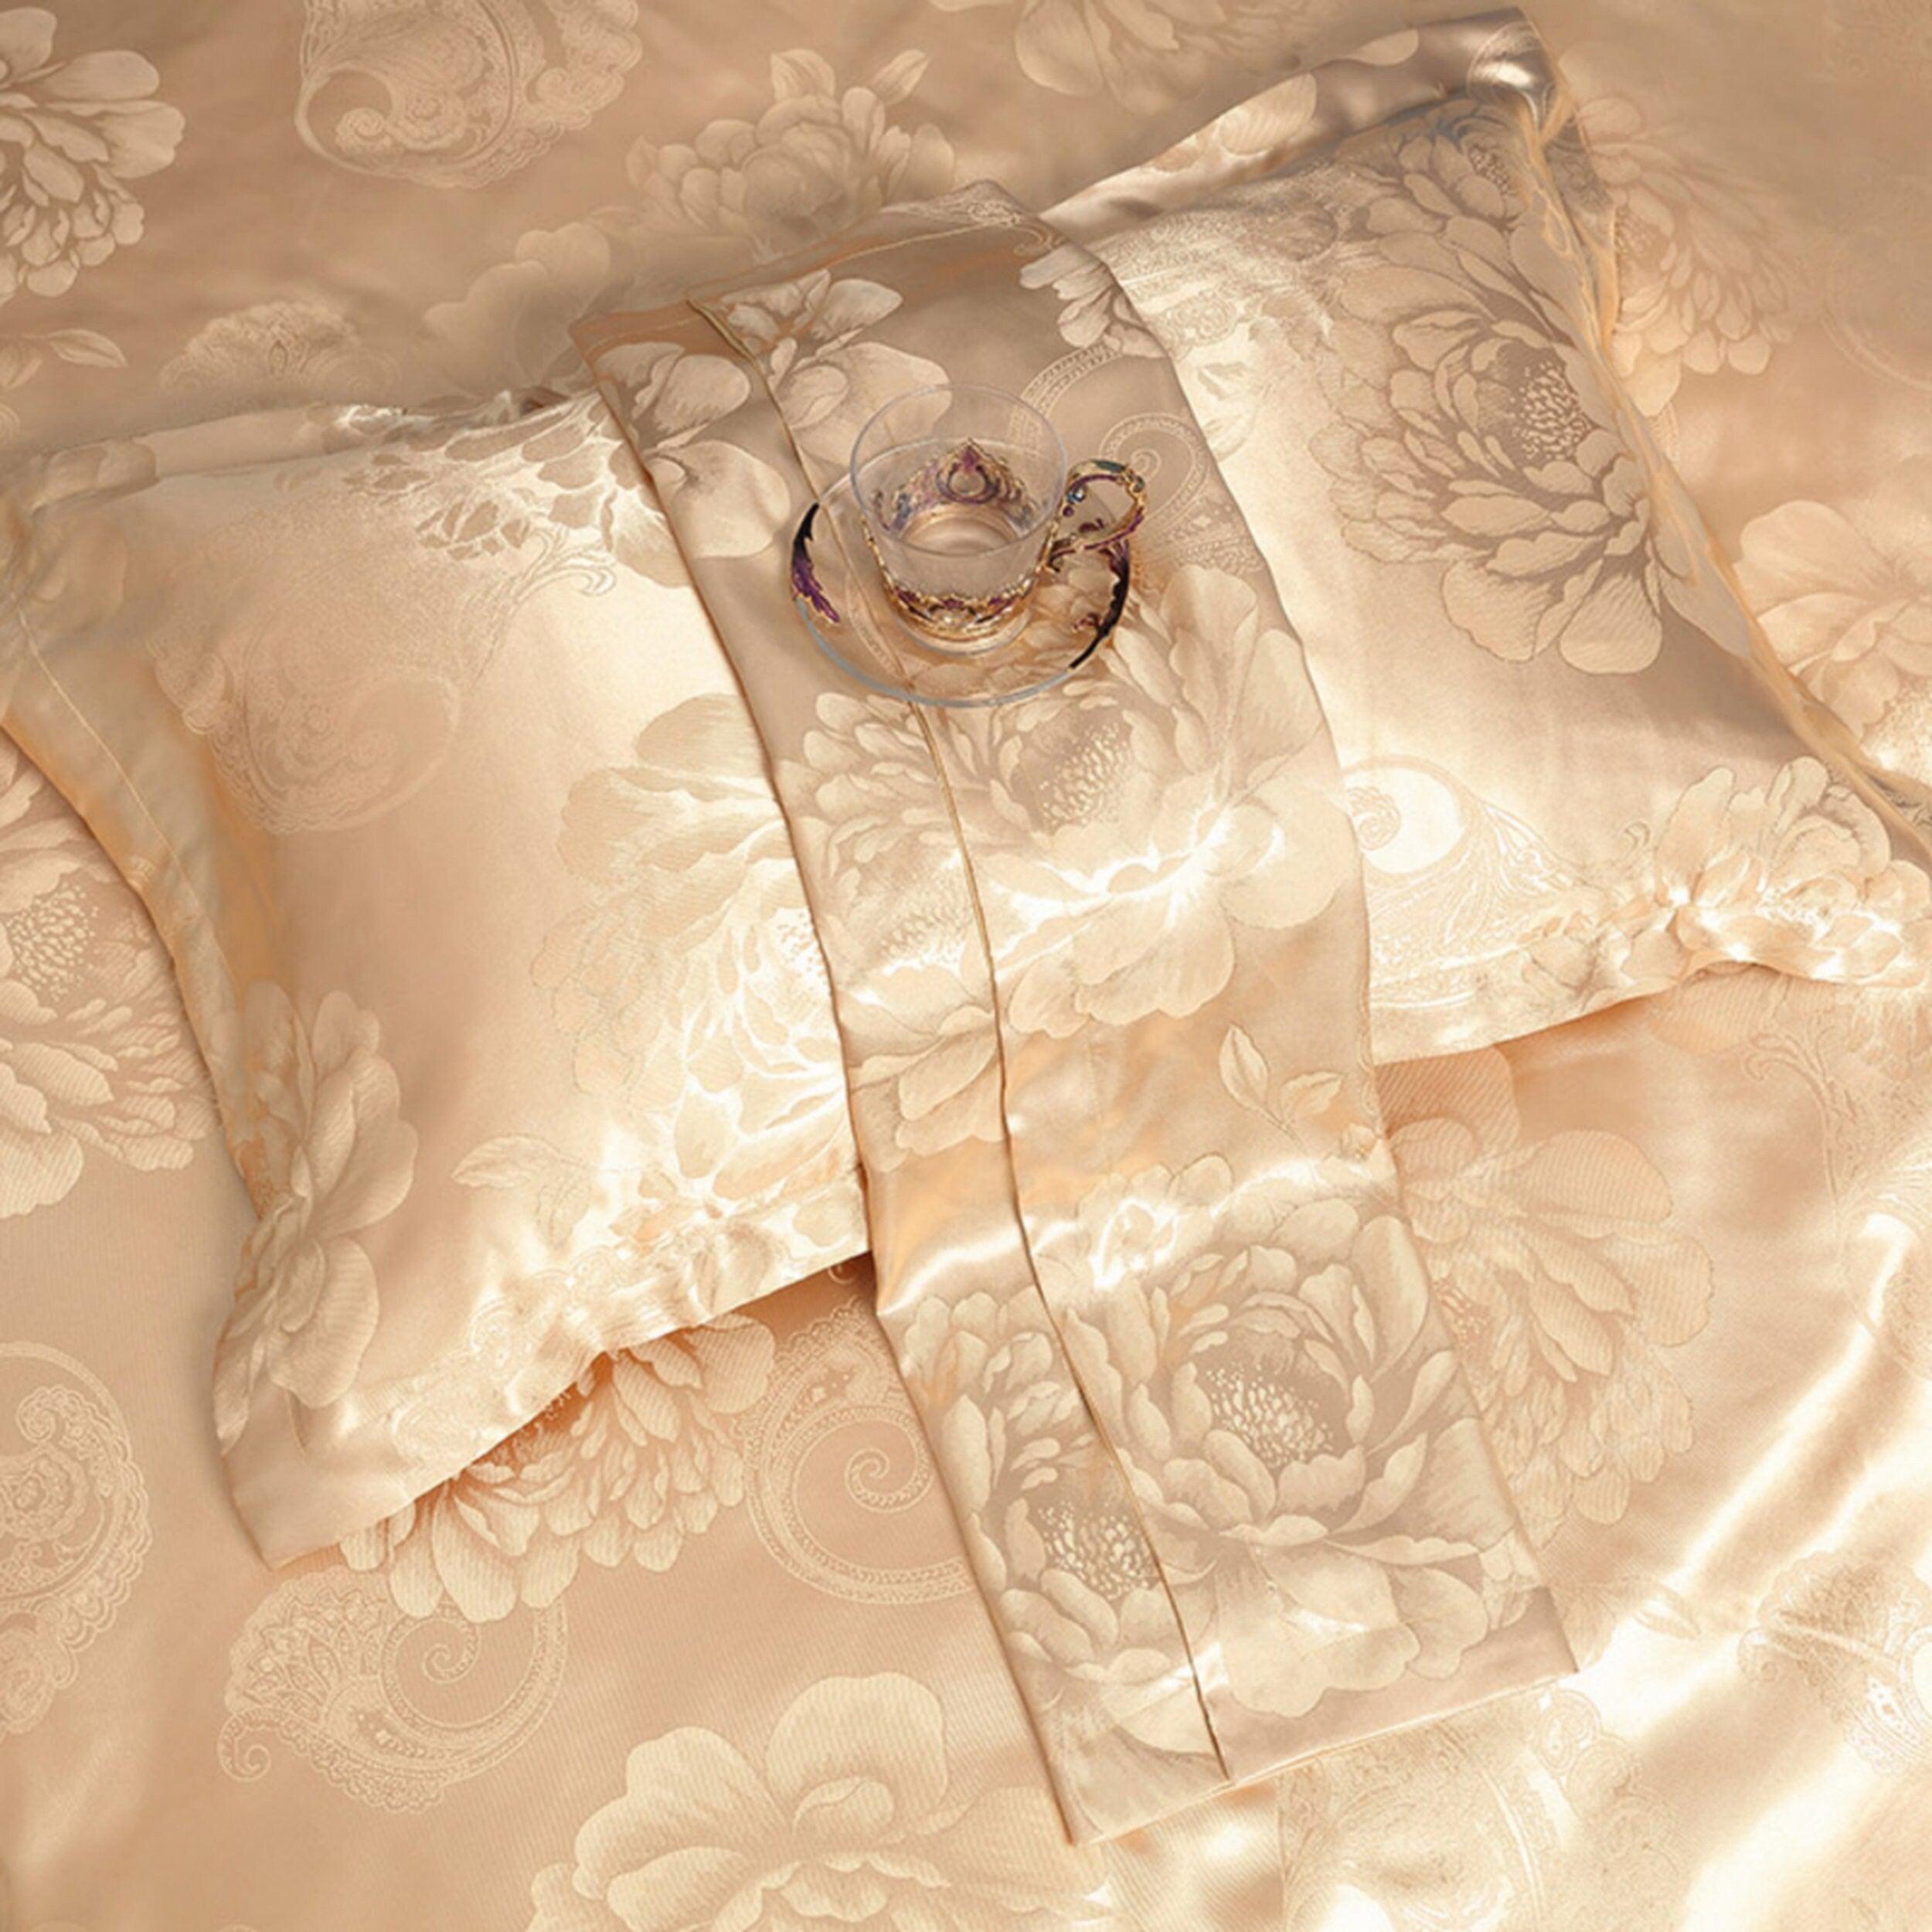 daintyduvet Luxury Beige Duvet Cover Set, Jacquard Fabric Aesthetic Bedding Decorative, Embroidered Bedding Set